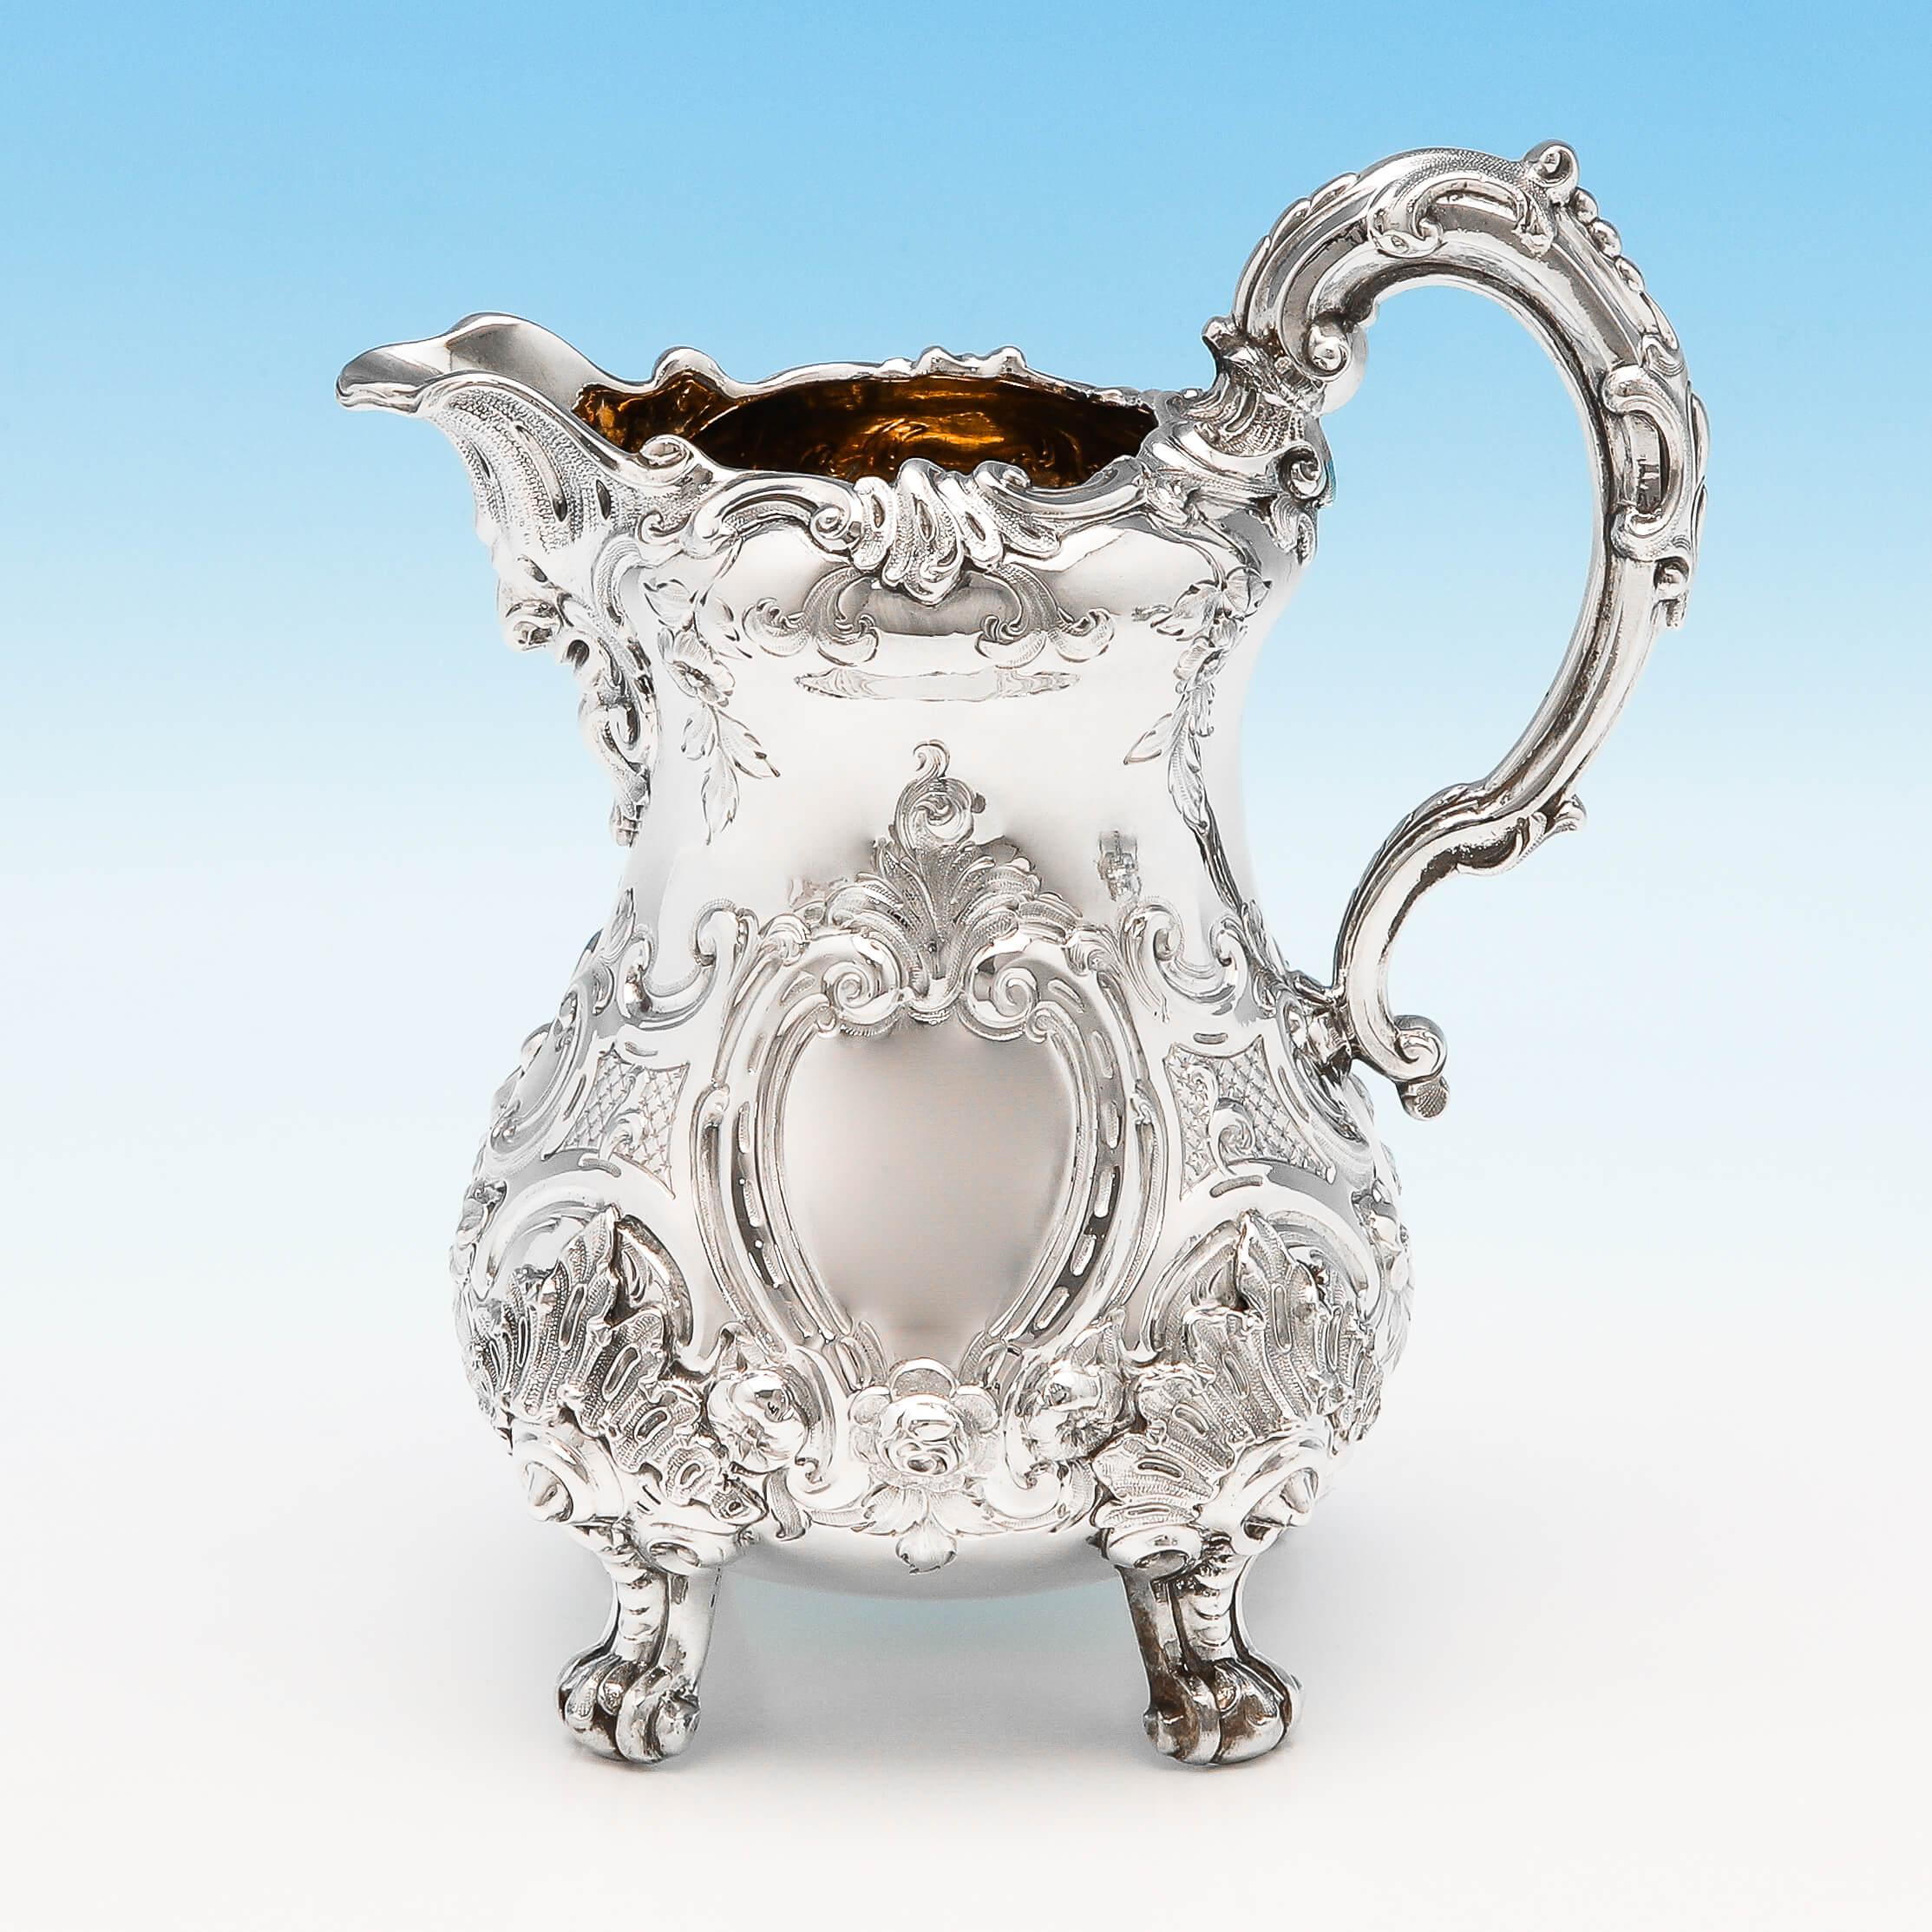 English Victorian Ornate Sterling Silver Three-Piece Tea Set by Barnards London, 1855